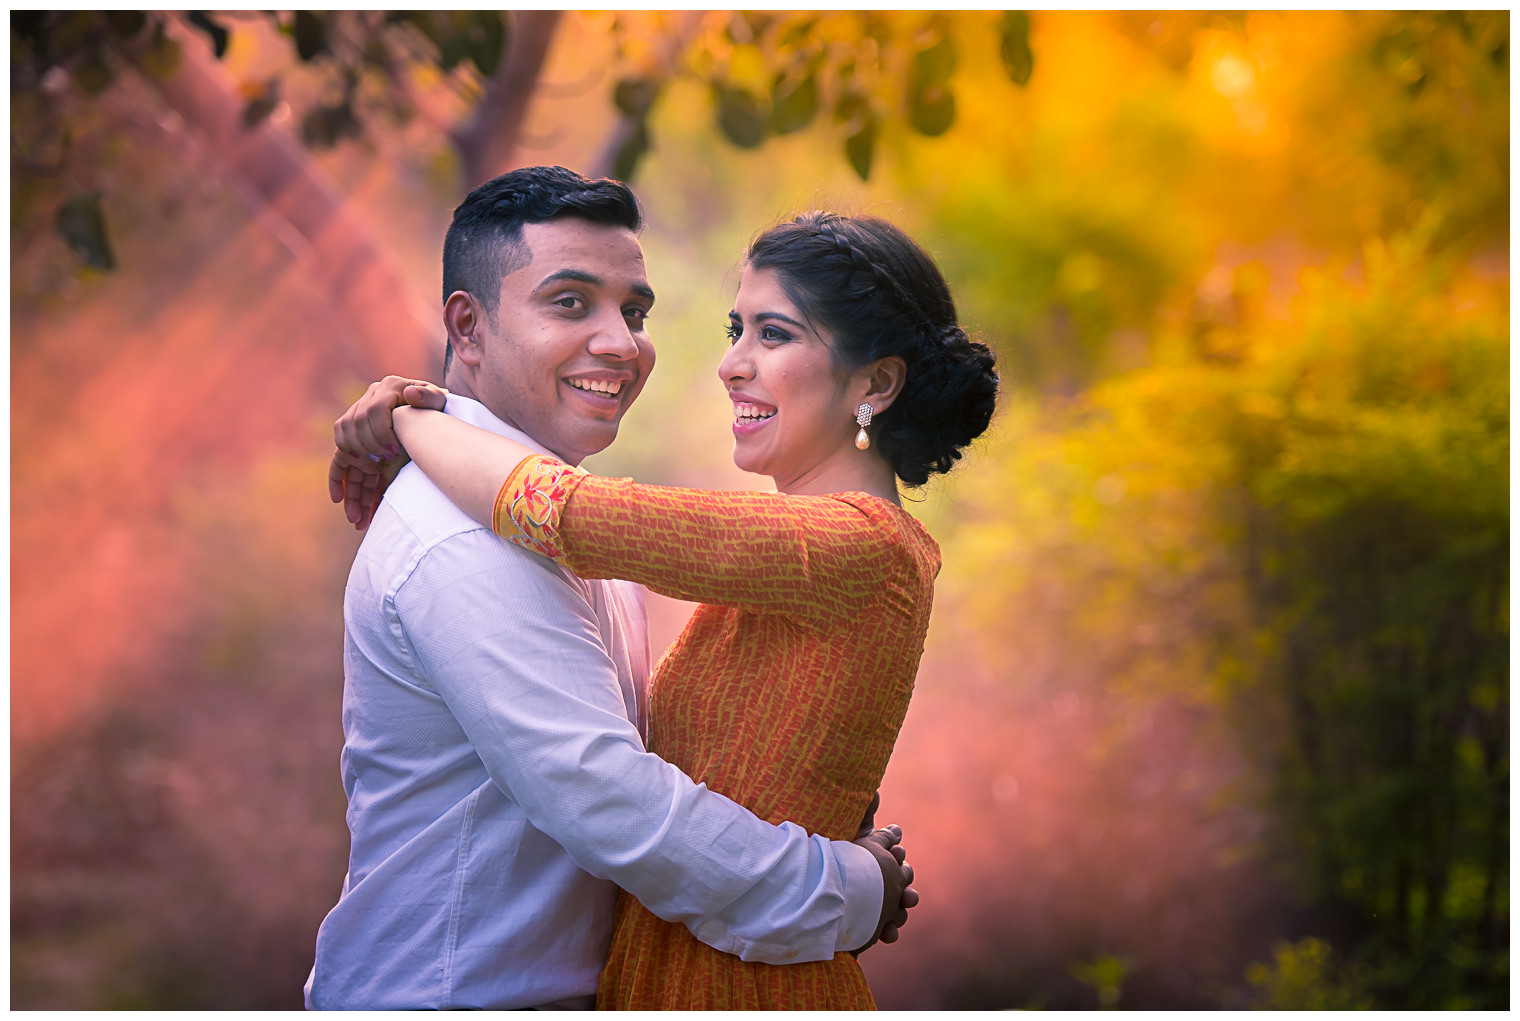 Couples Portrait Photography | Couple Photoshoot Chennai